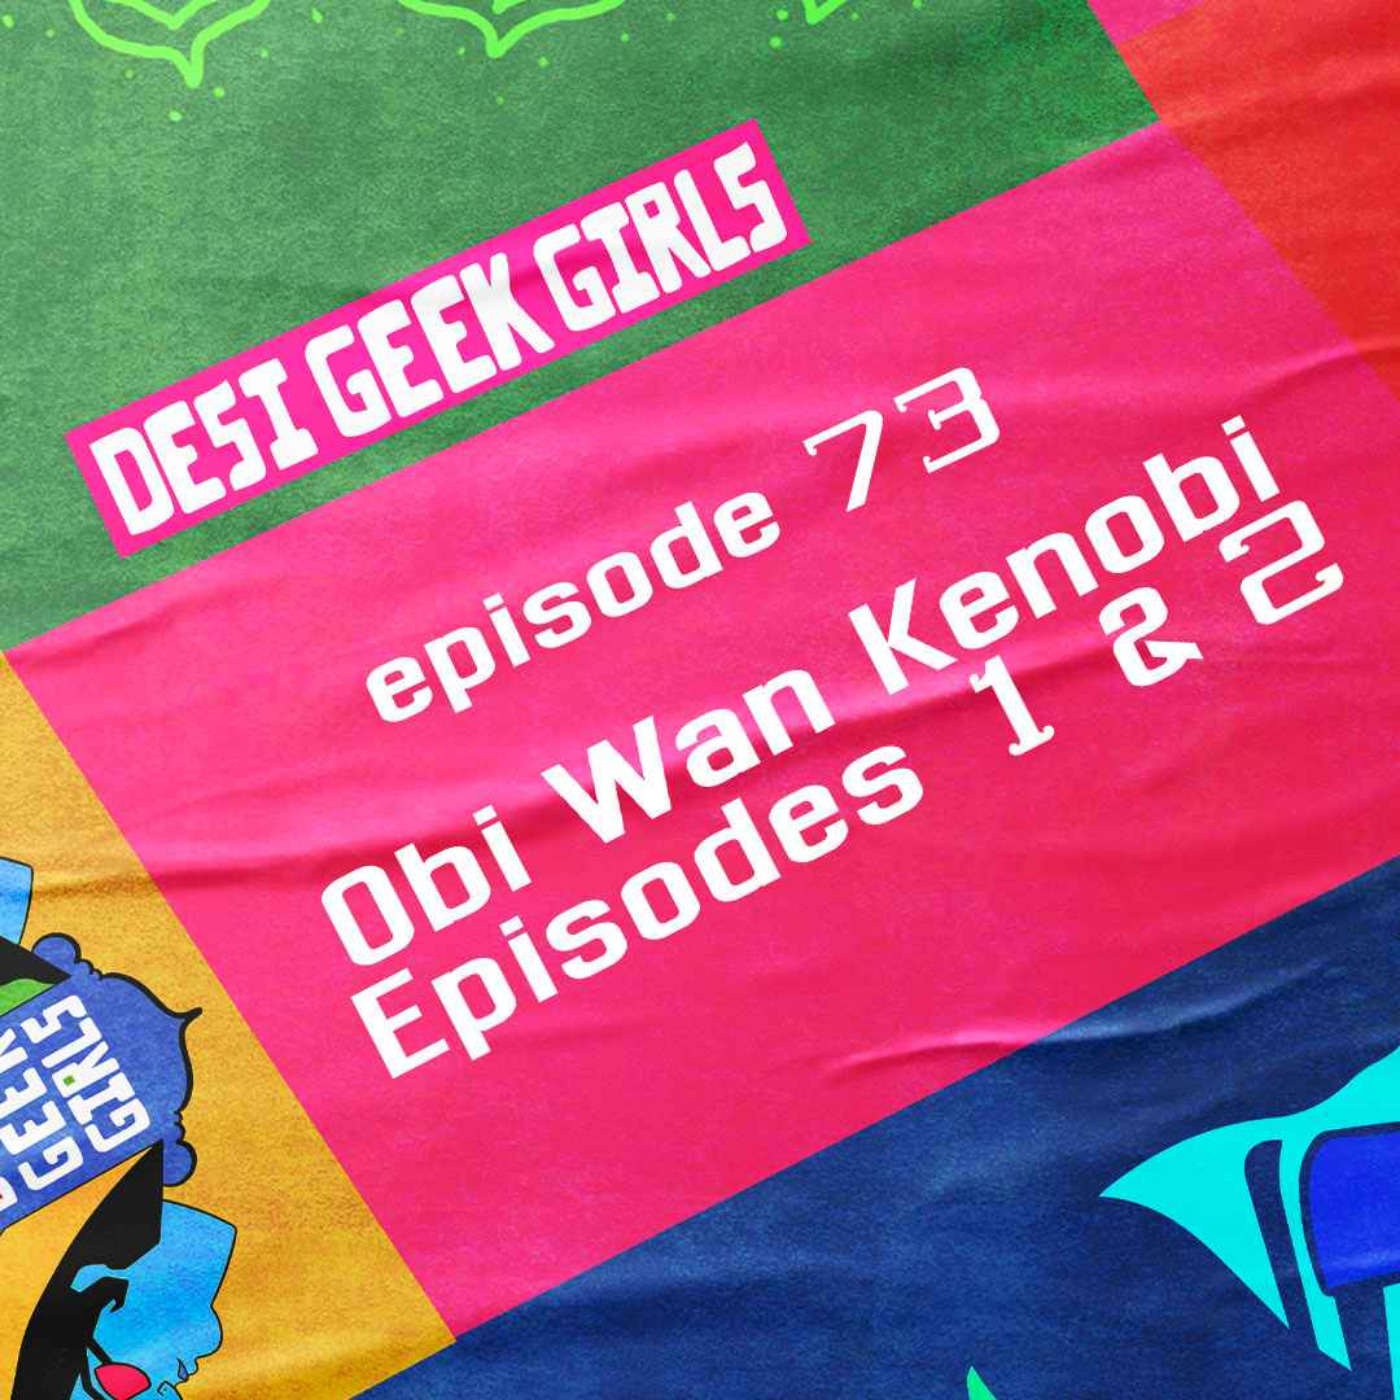 Obi Wan Kenobi (Episodes 1 & 2), Star Wars: Celebration, & More!